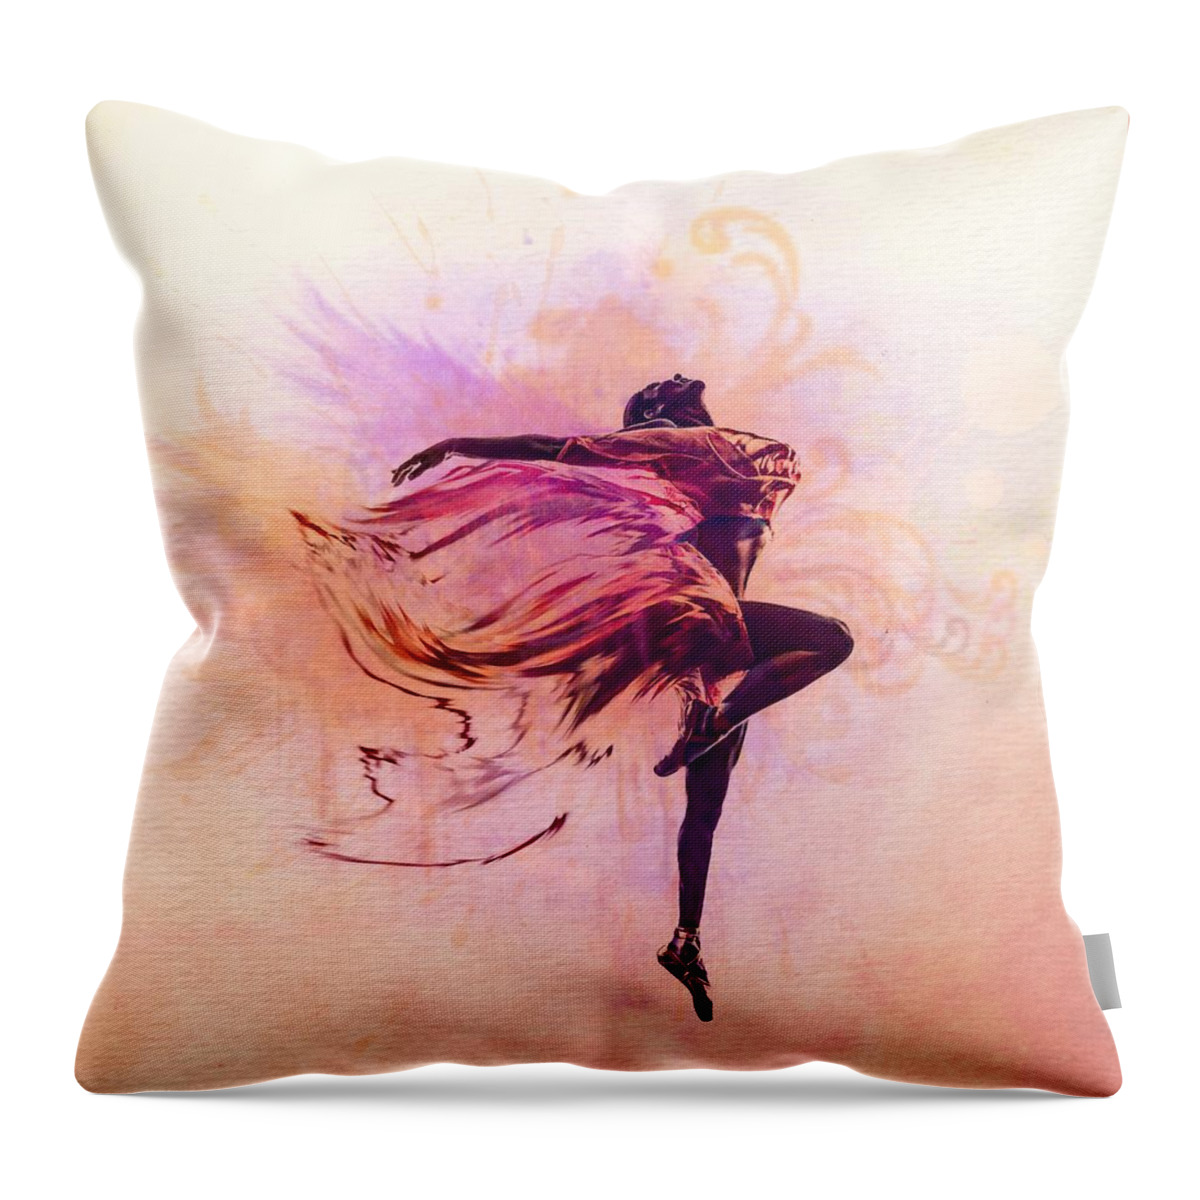 Dancer Throw Pillow featuring the digital art FAiry Dance by Lilia S